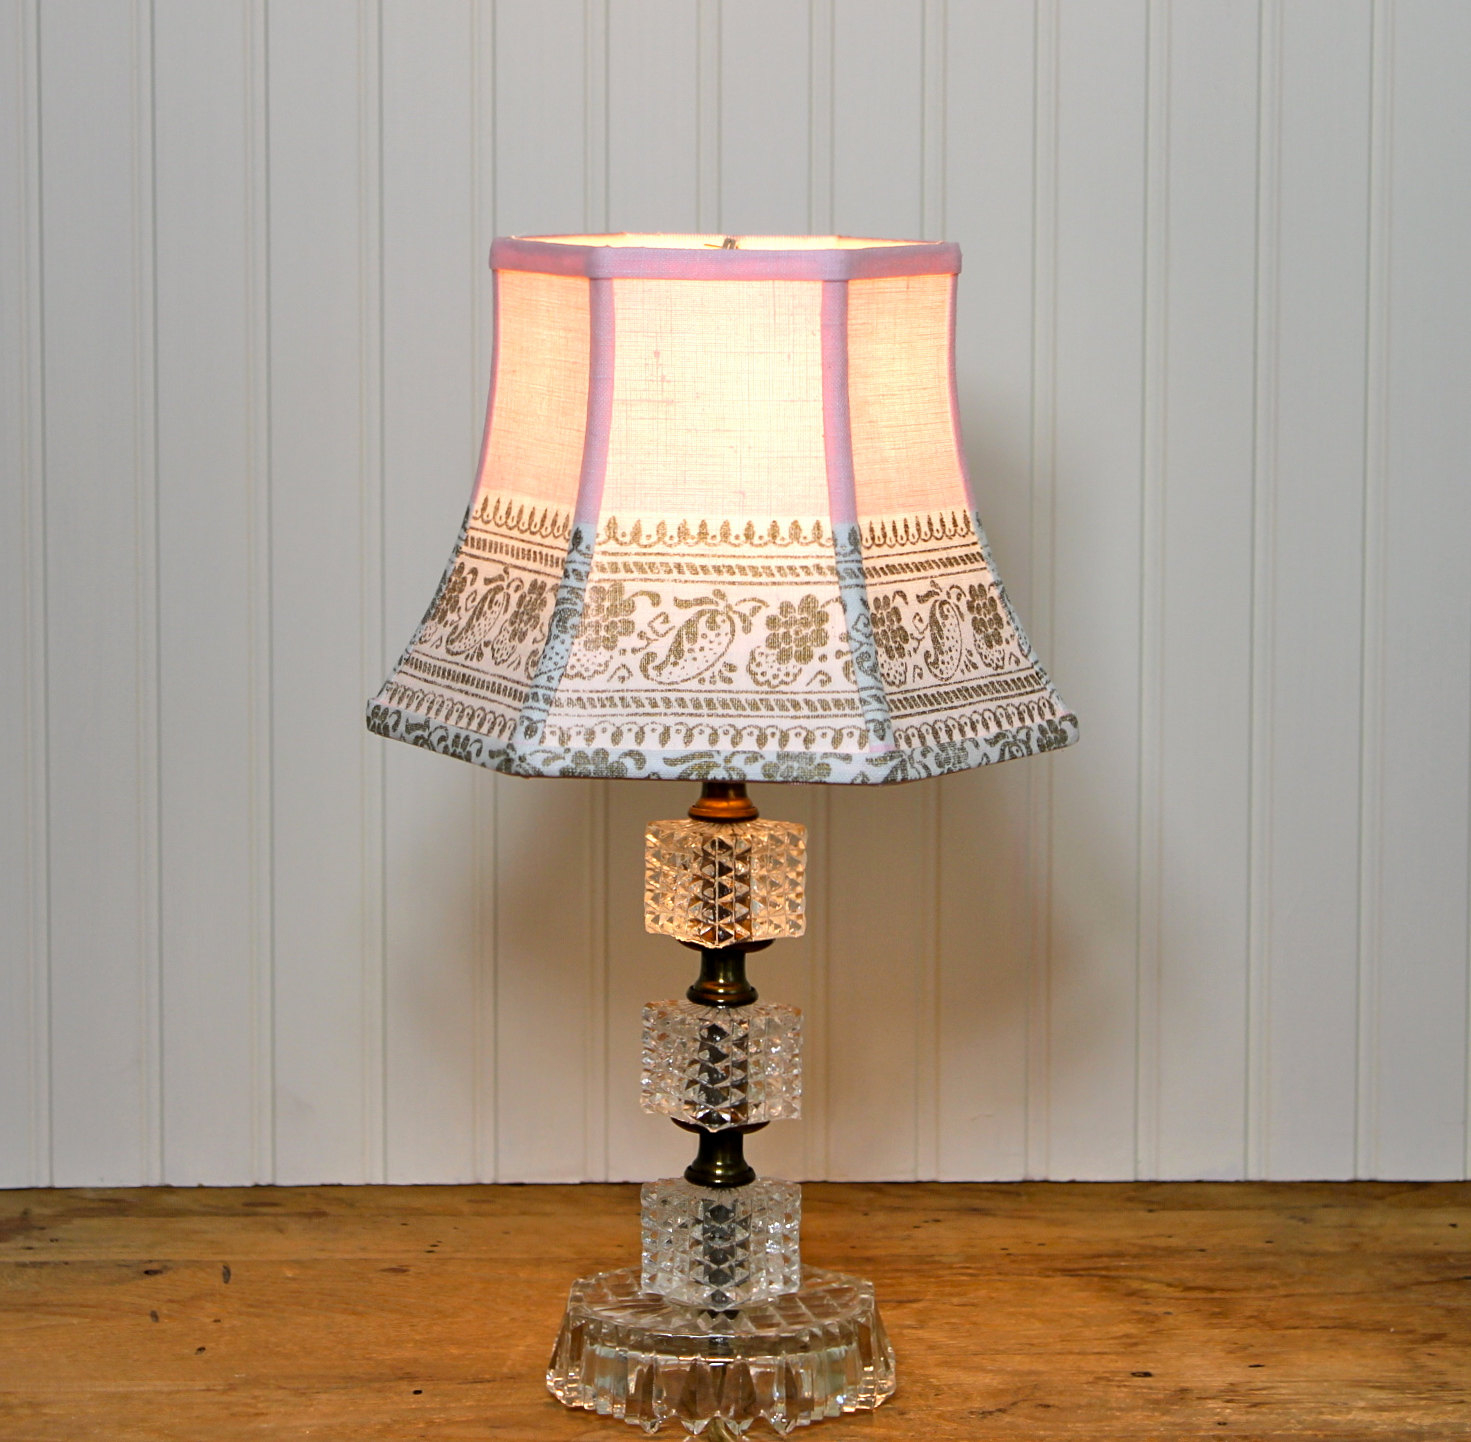 Shabby Chic Lamp Shades Visualhunt, Small Vintage Table Lamp Shades